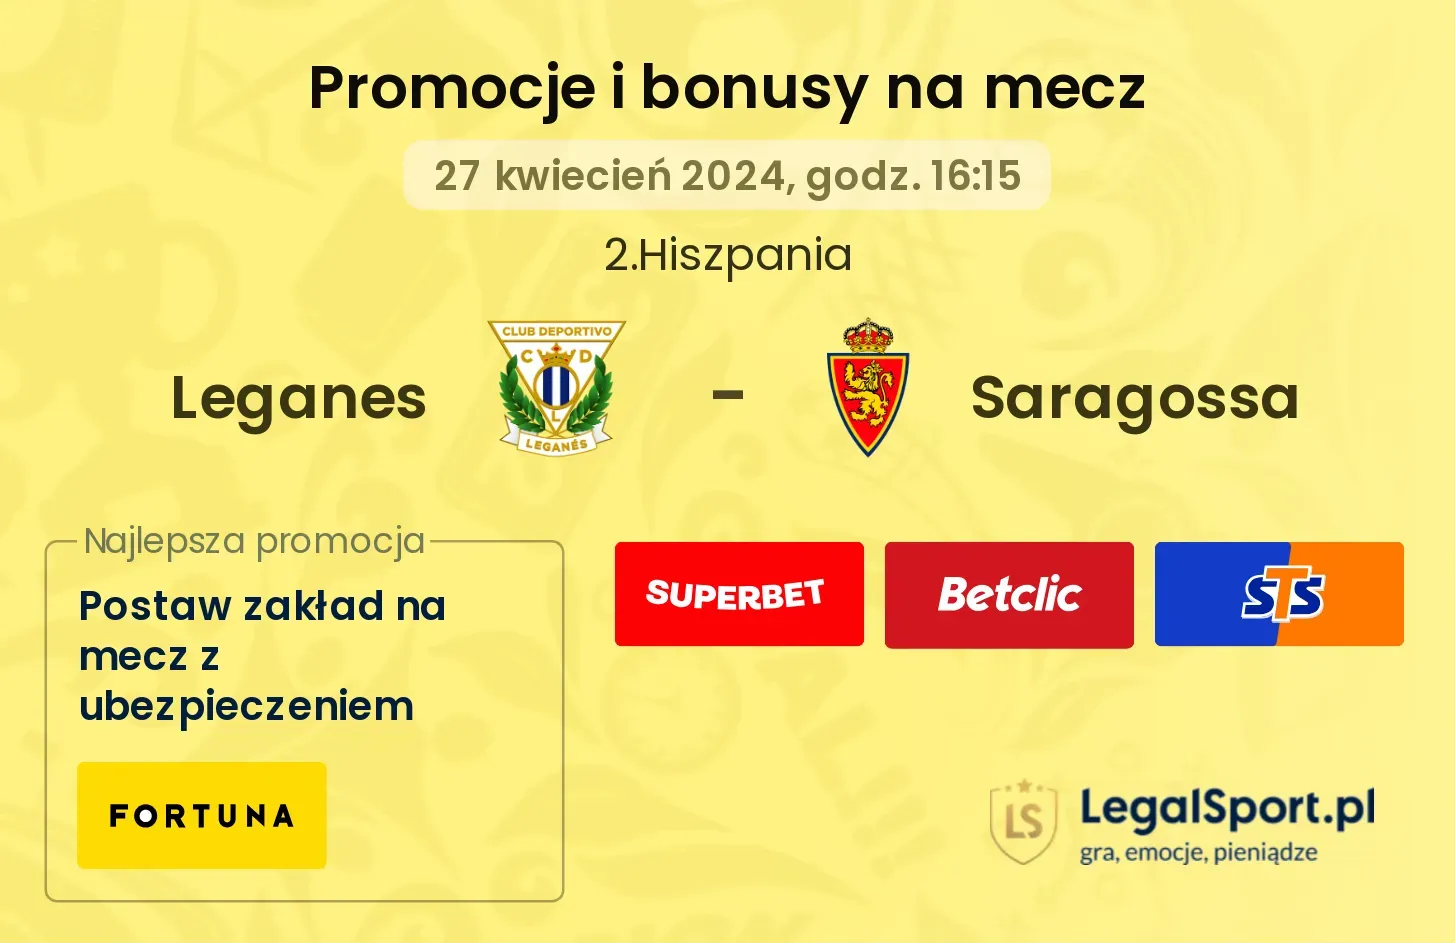 Leganes - Saragossa promocje bonusy na mecz